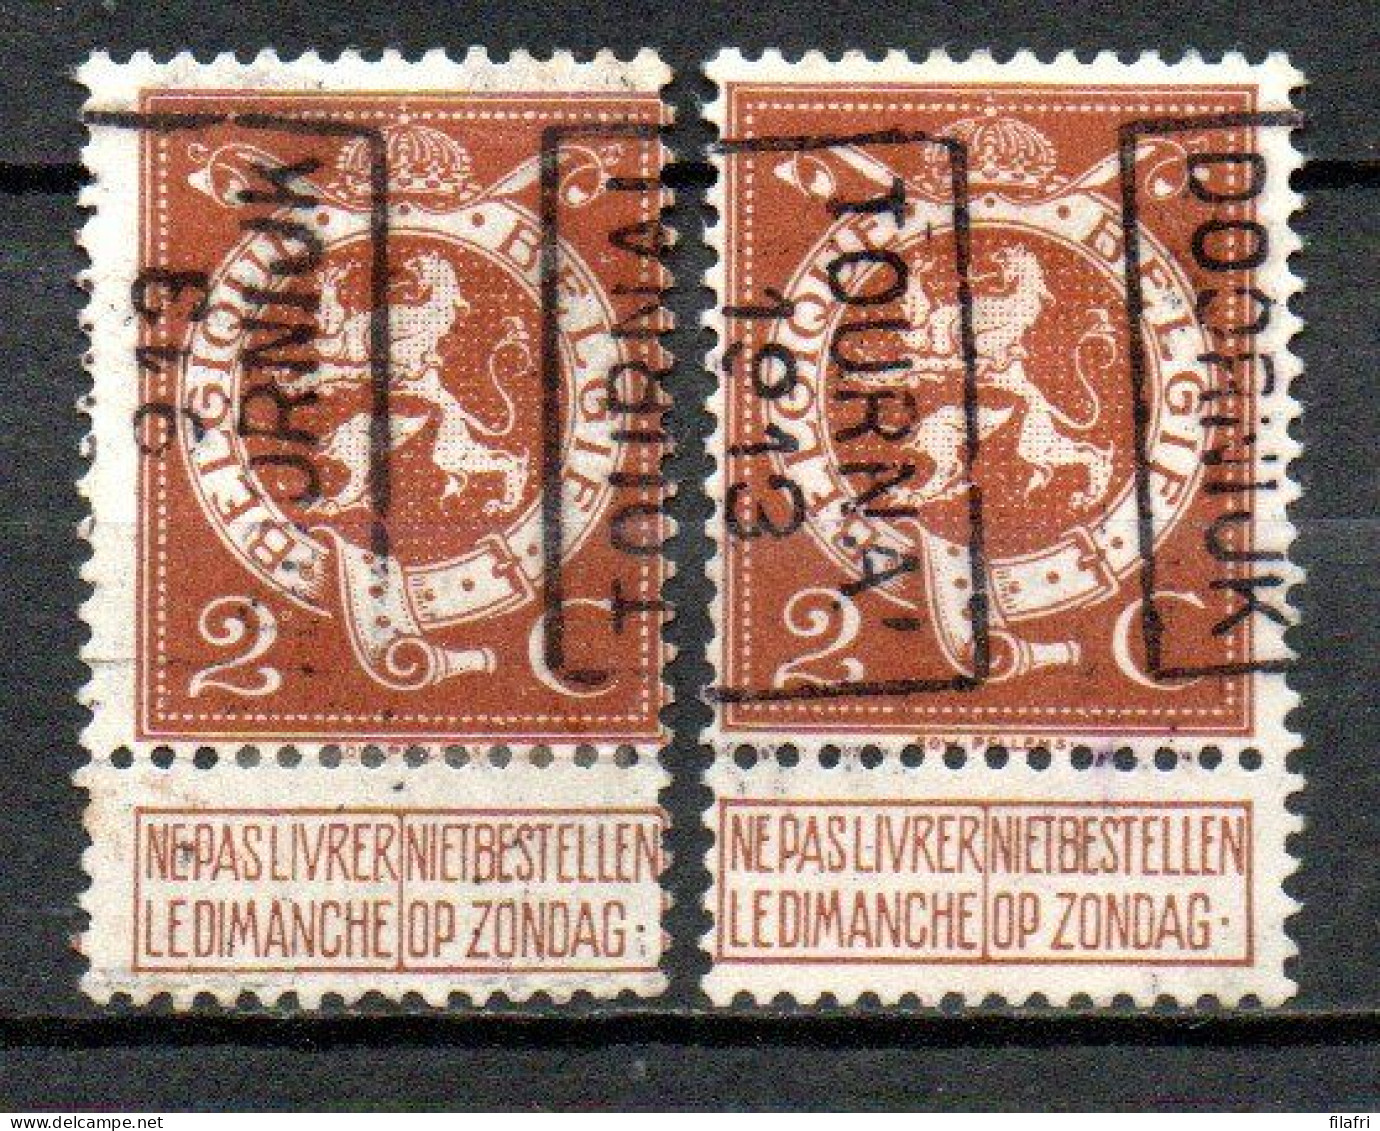 2241 Voorafstempeling Op Nr 109 - TOURNAI 1913 DOORNIJK - Positie A & B - Rolstempels 1910-19